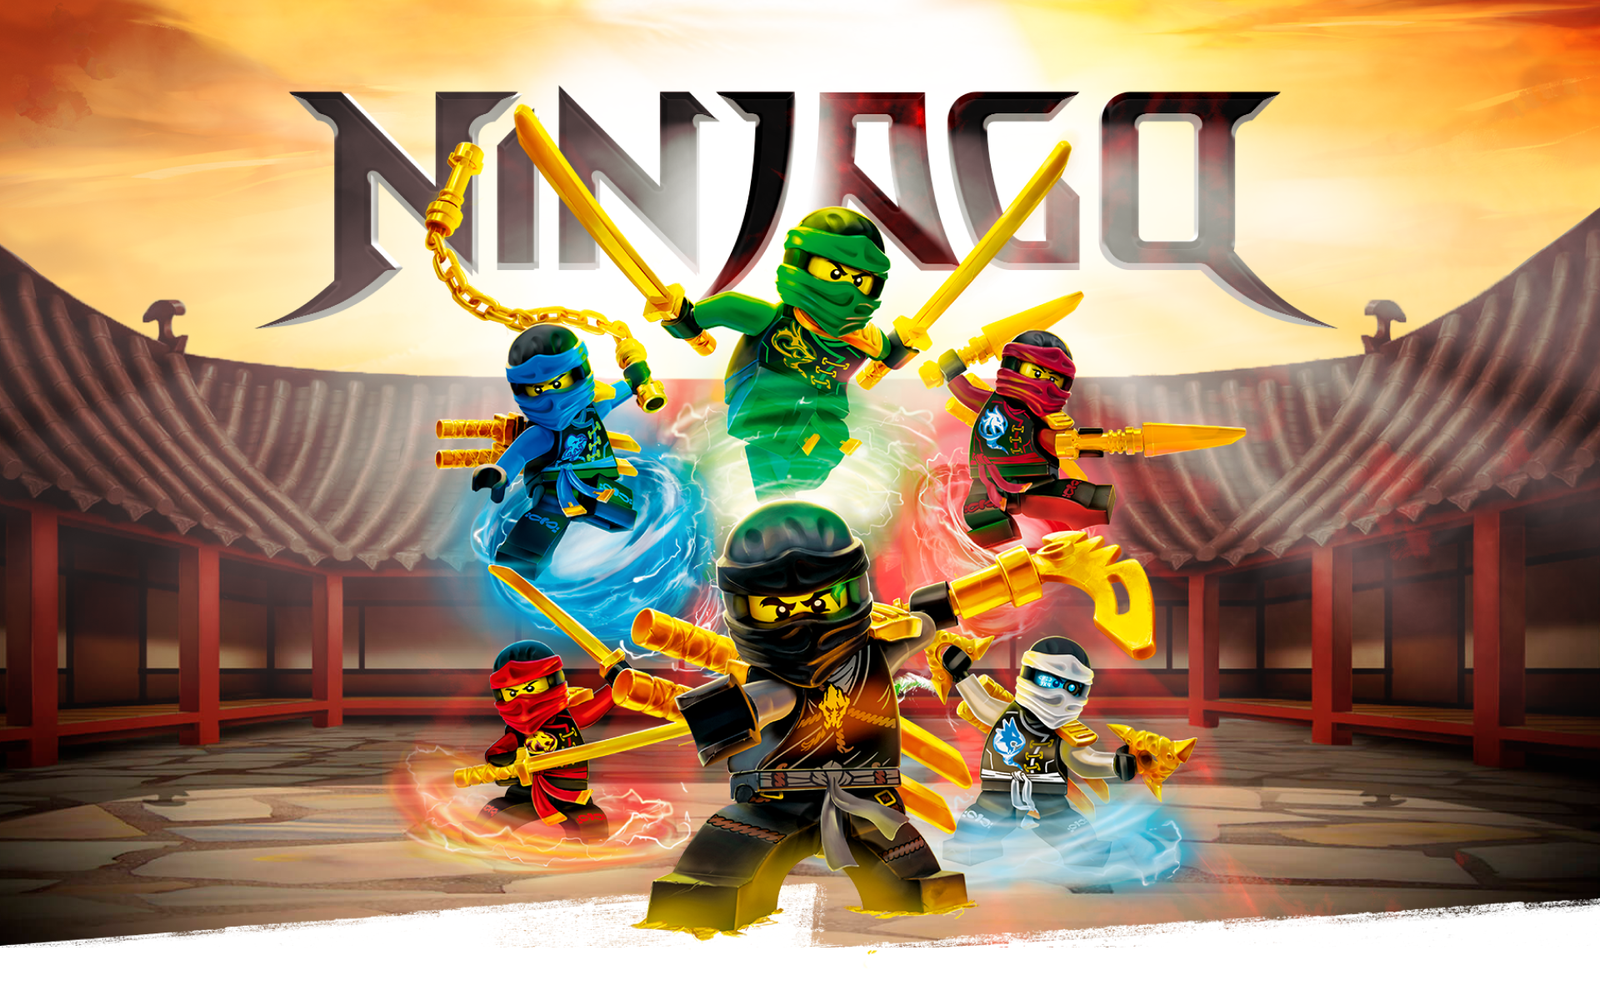 LEGO NINJAGO: Ninja Power! (Activity Book with Minifigure)